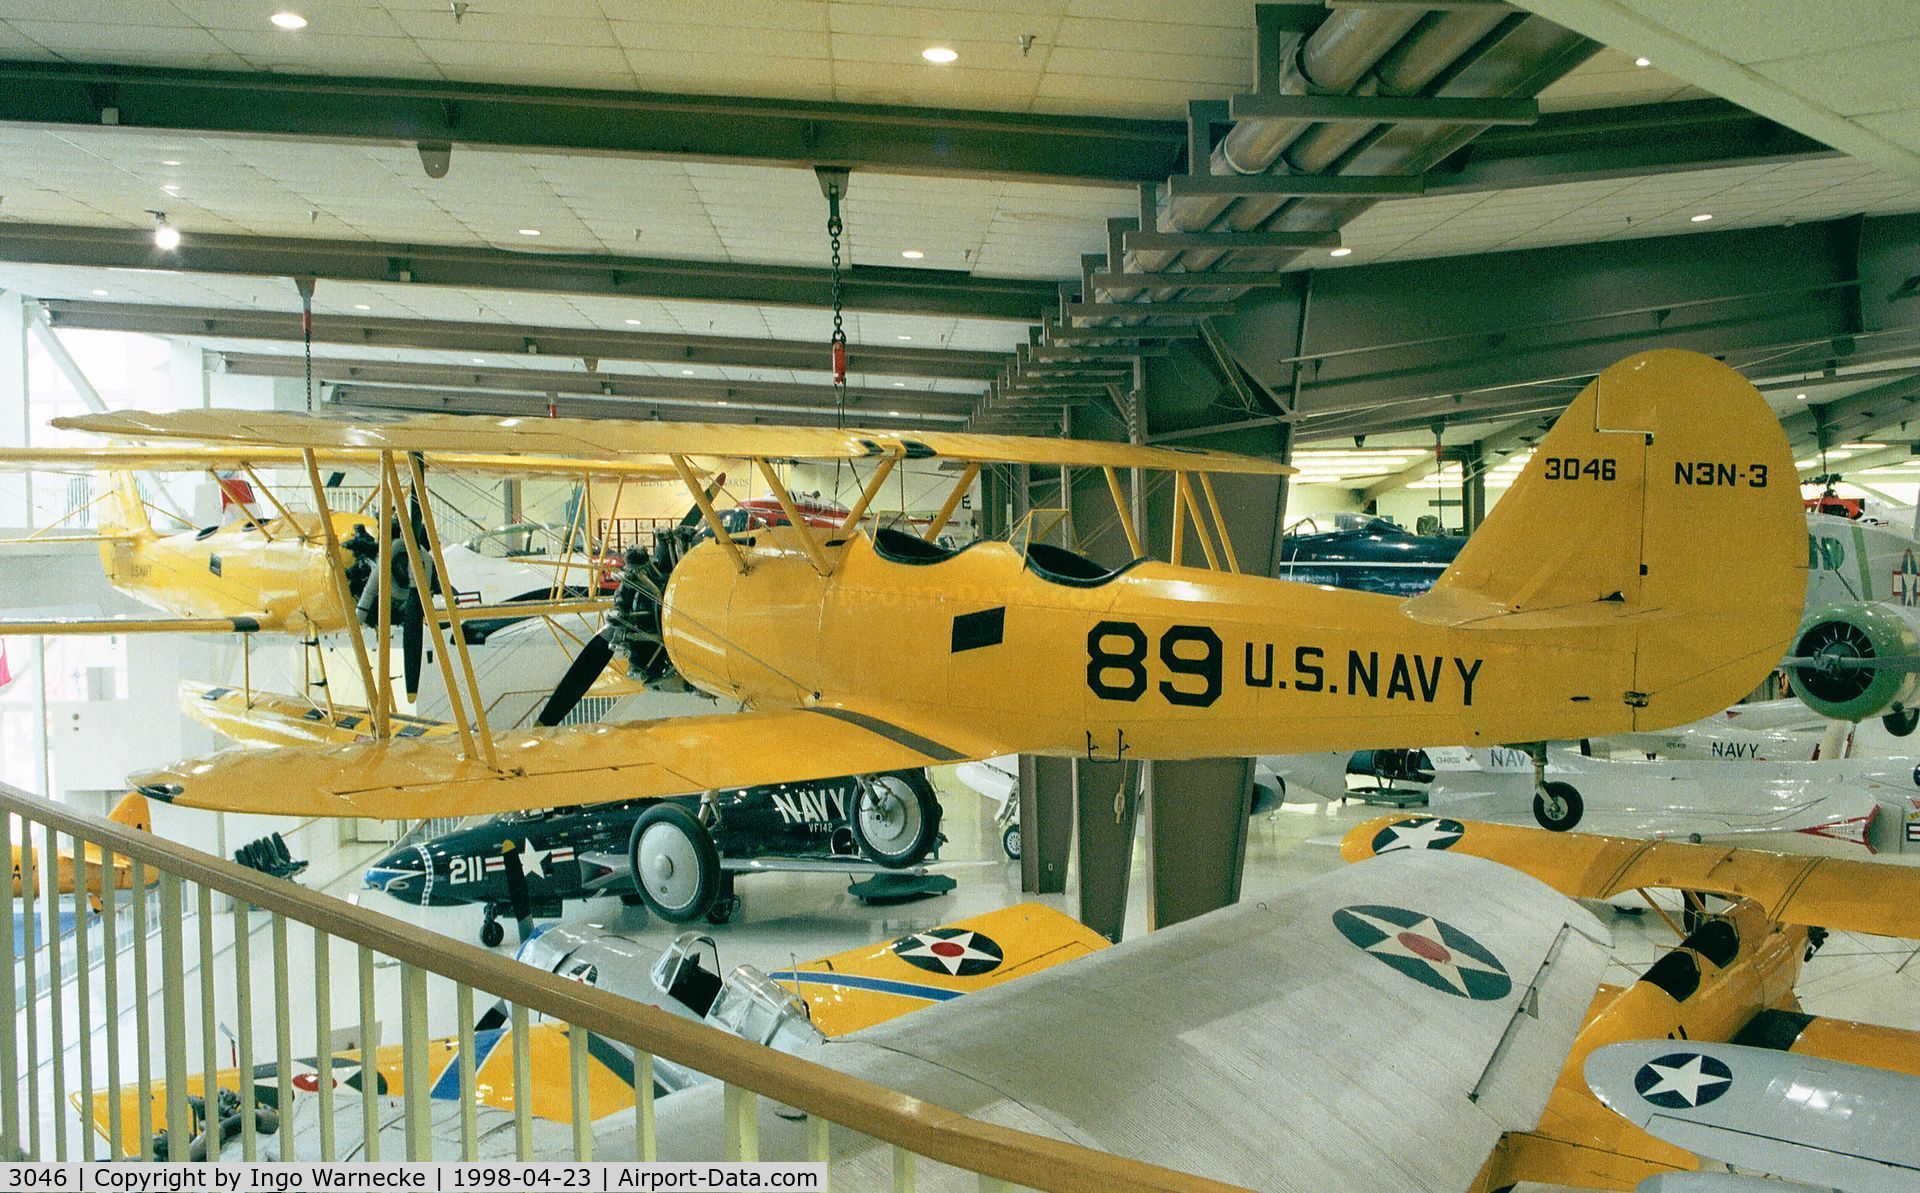 3046, Naval Aircraft Factory N3N-3 C/N Not found 3046, Naval Aircraft Factory N3N-3 at the Museum of Naval Aviation, Pensacola FL